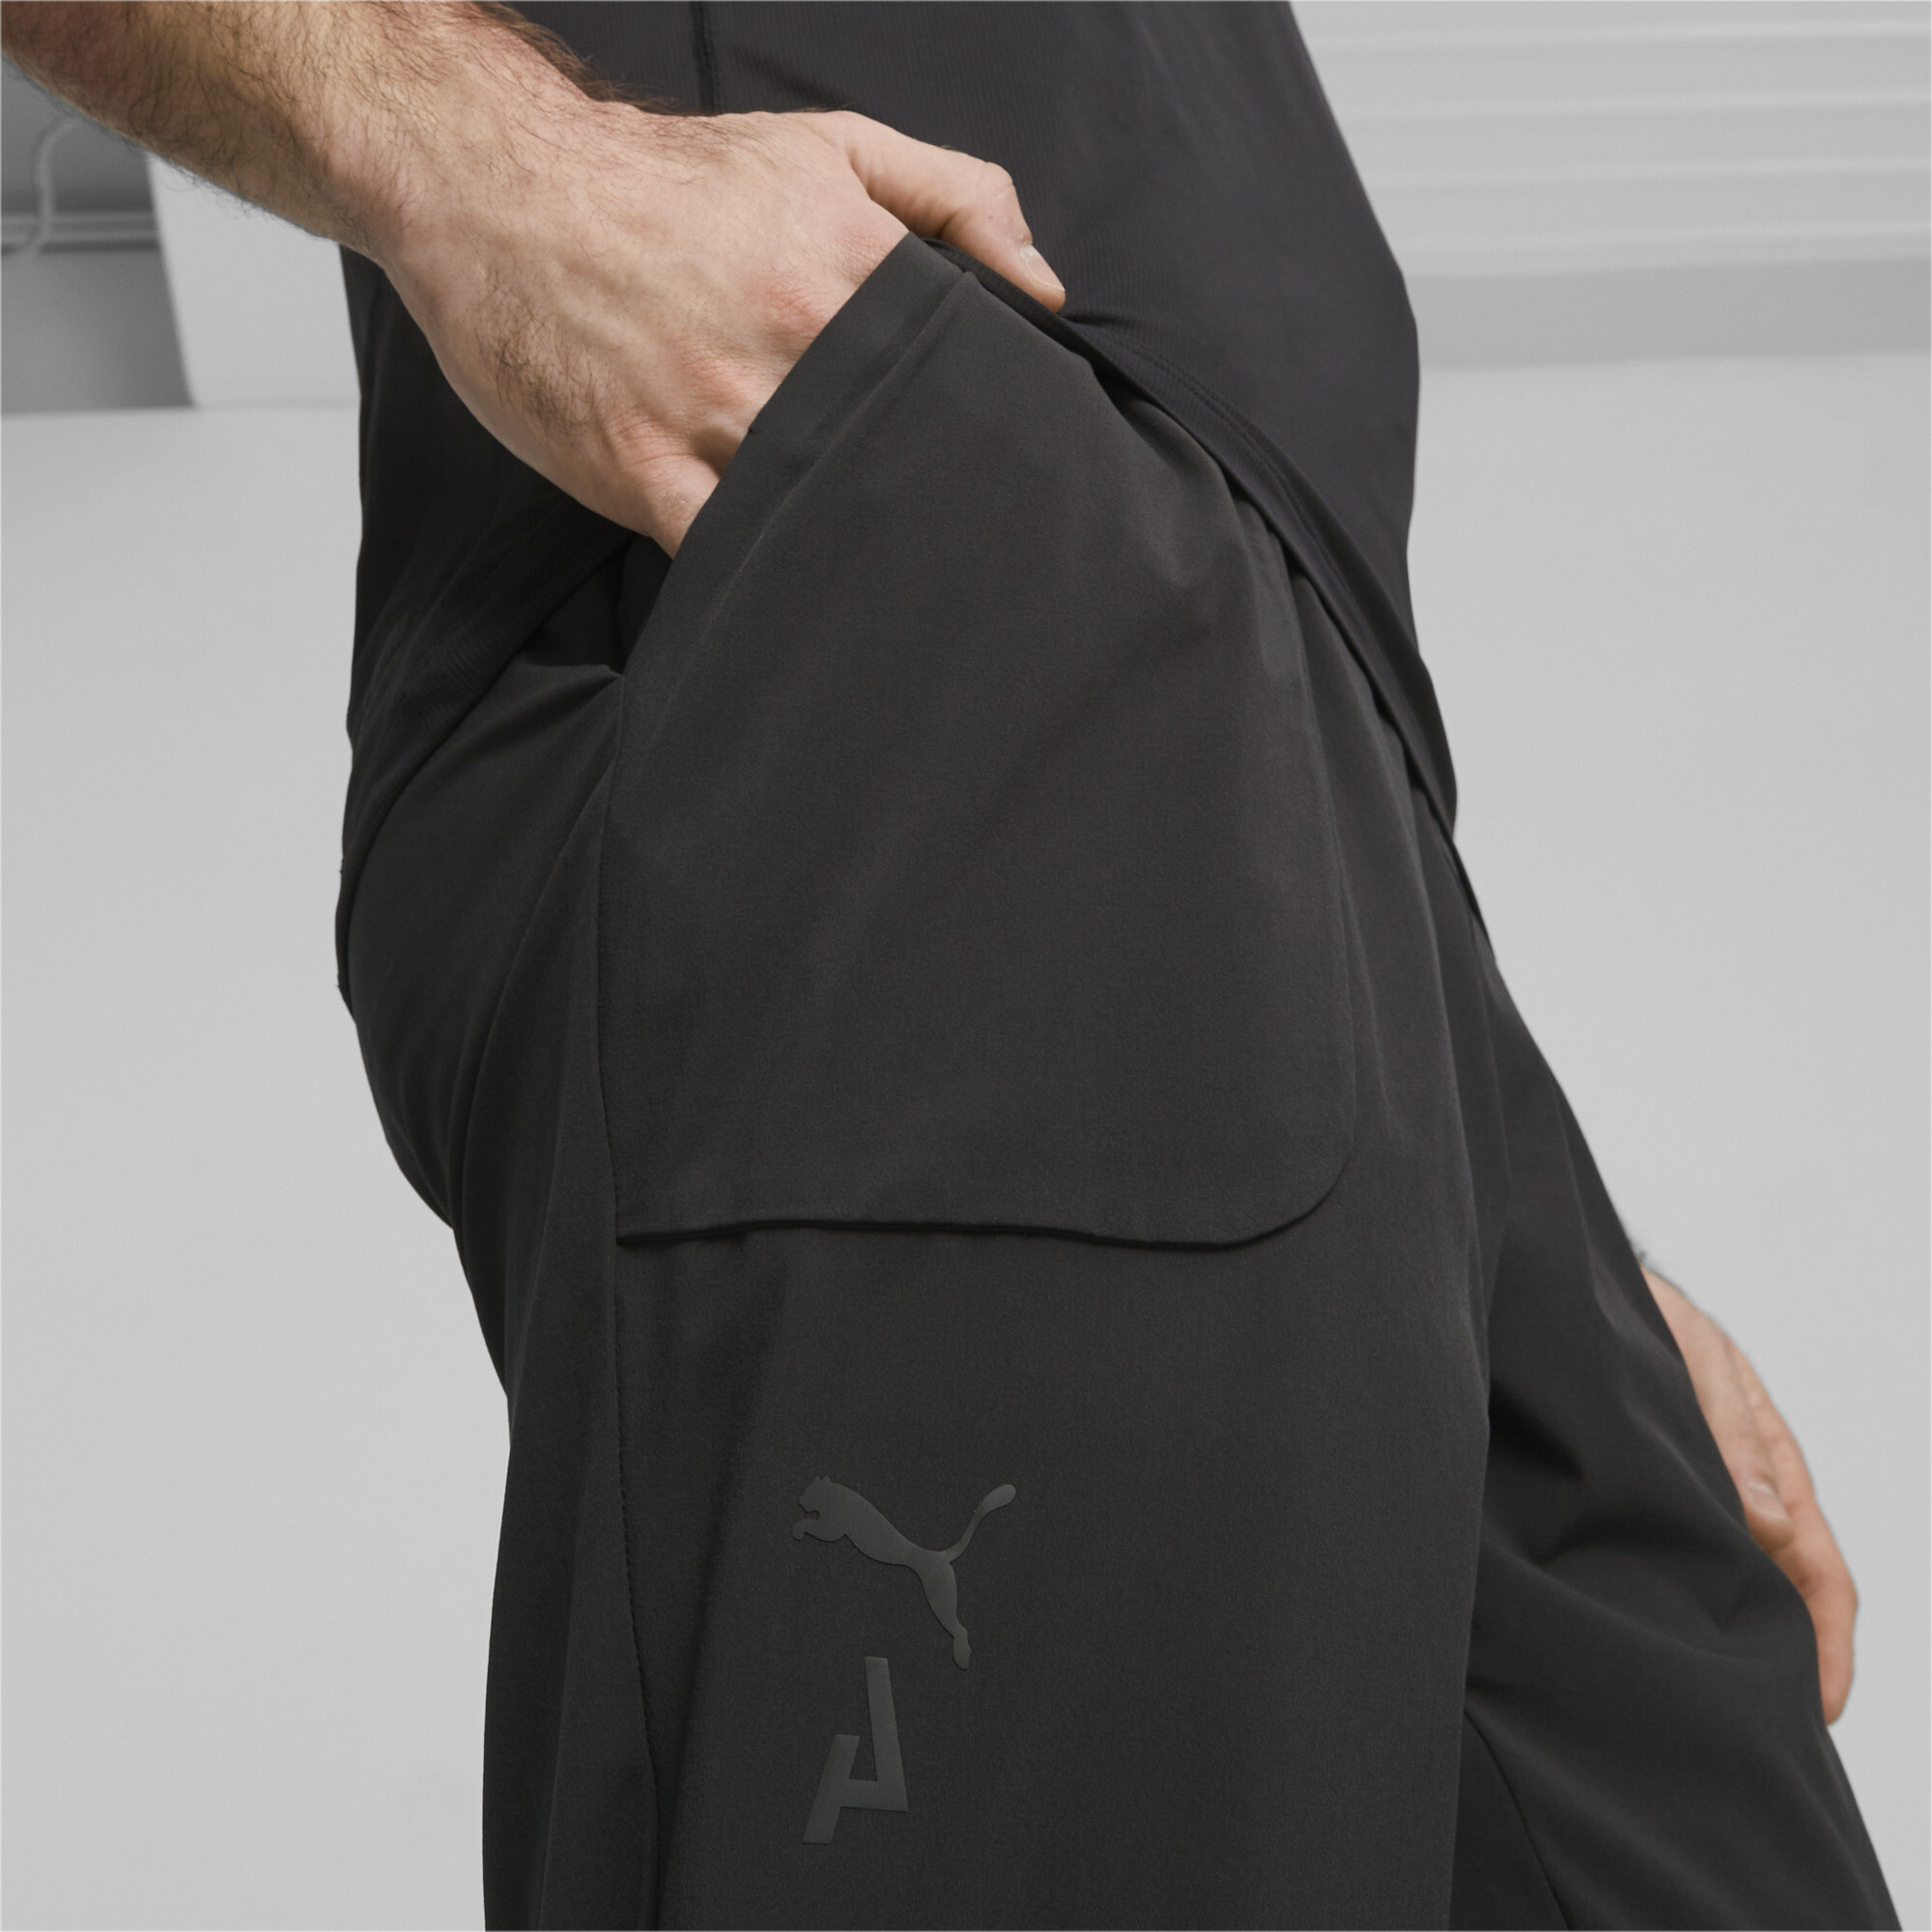 Men's PUMA SEASONS Lightweight Trail Running Pants In Black, Size Medium